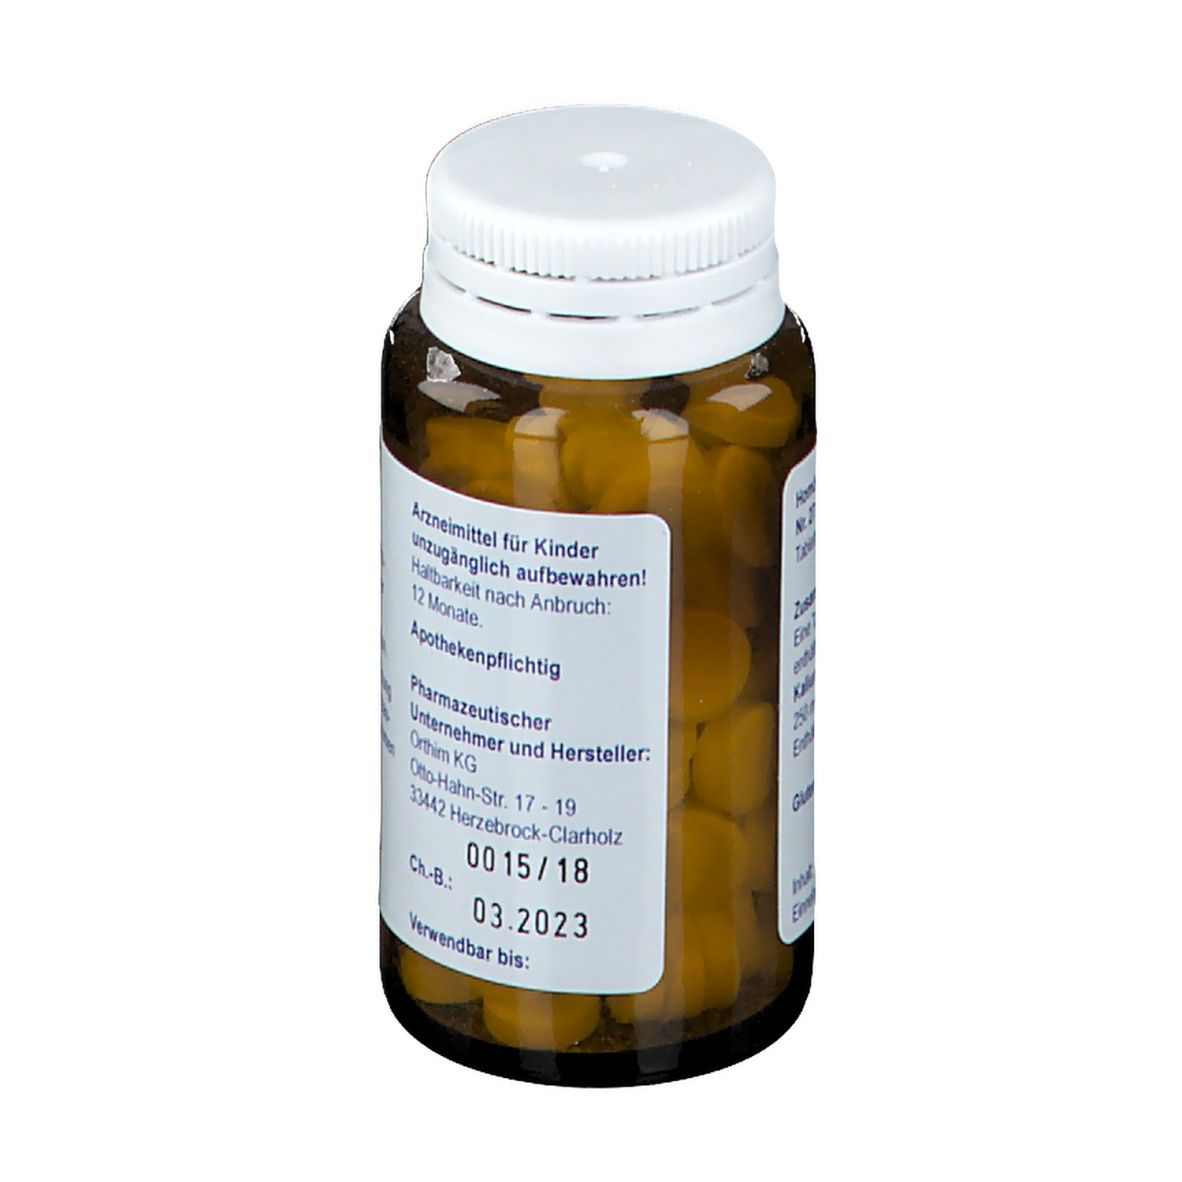 Biochemie orthim® Nr. 27 Kalium bichromicum D12